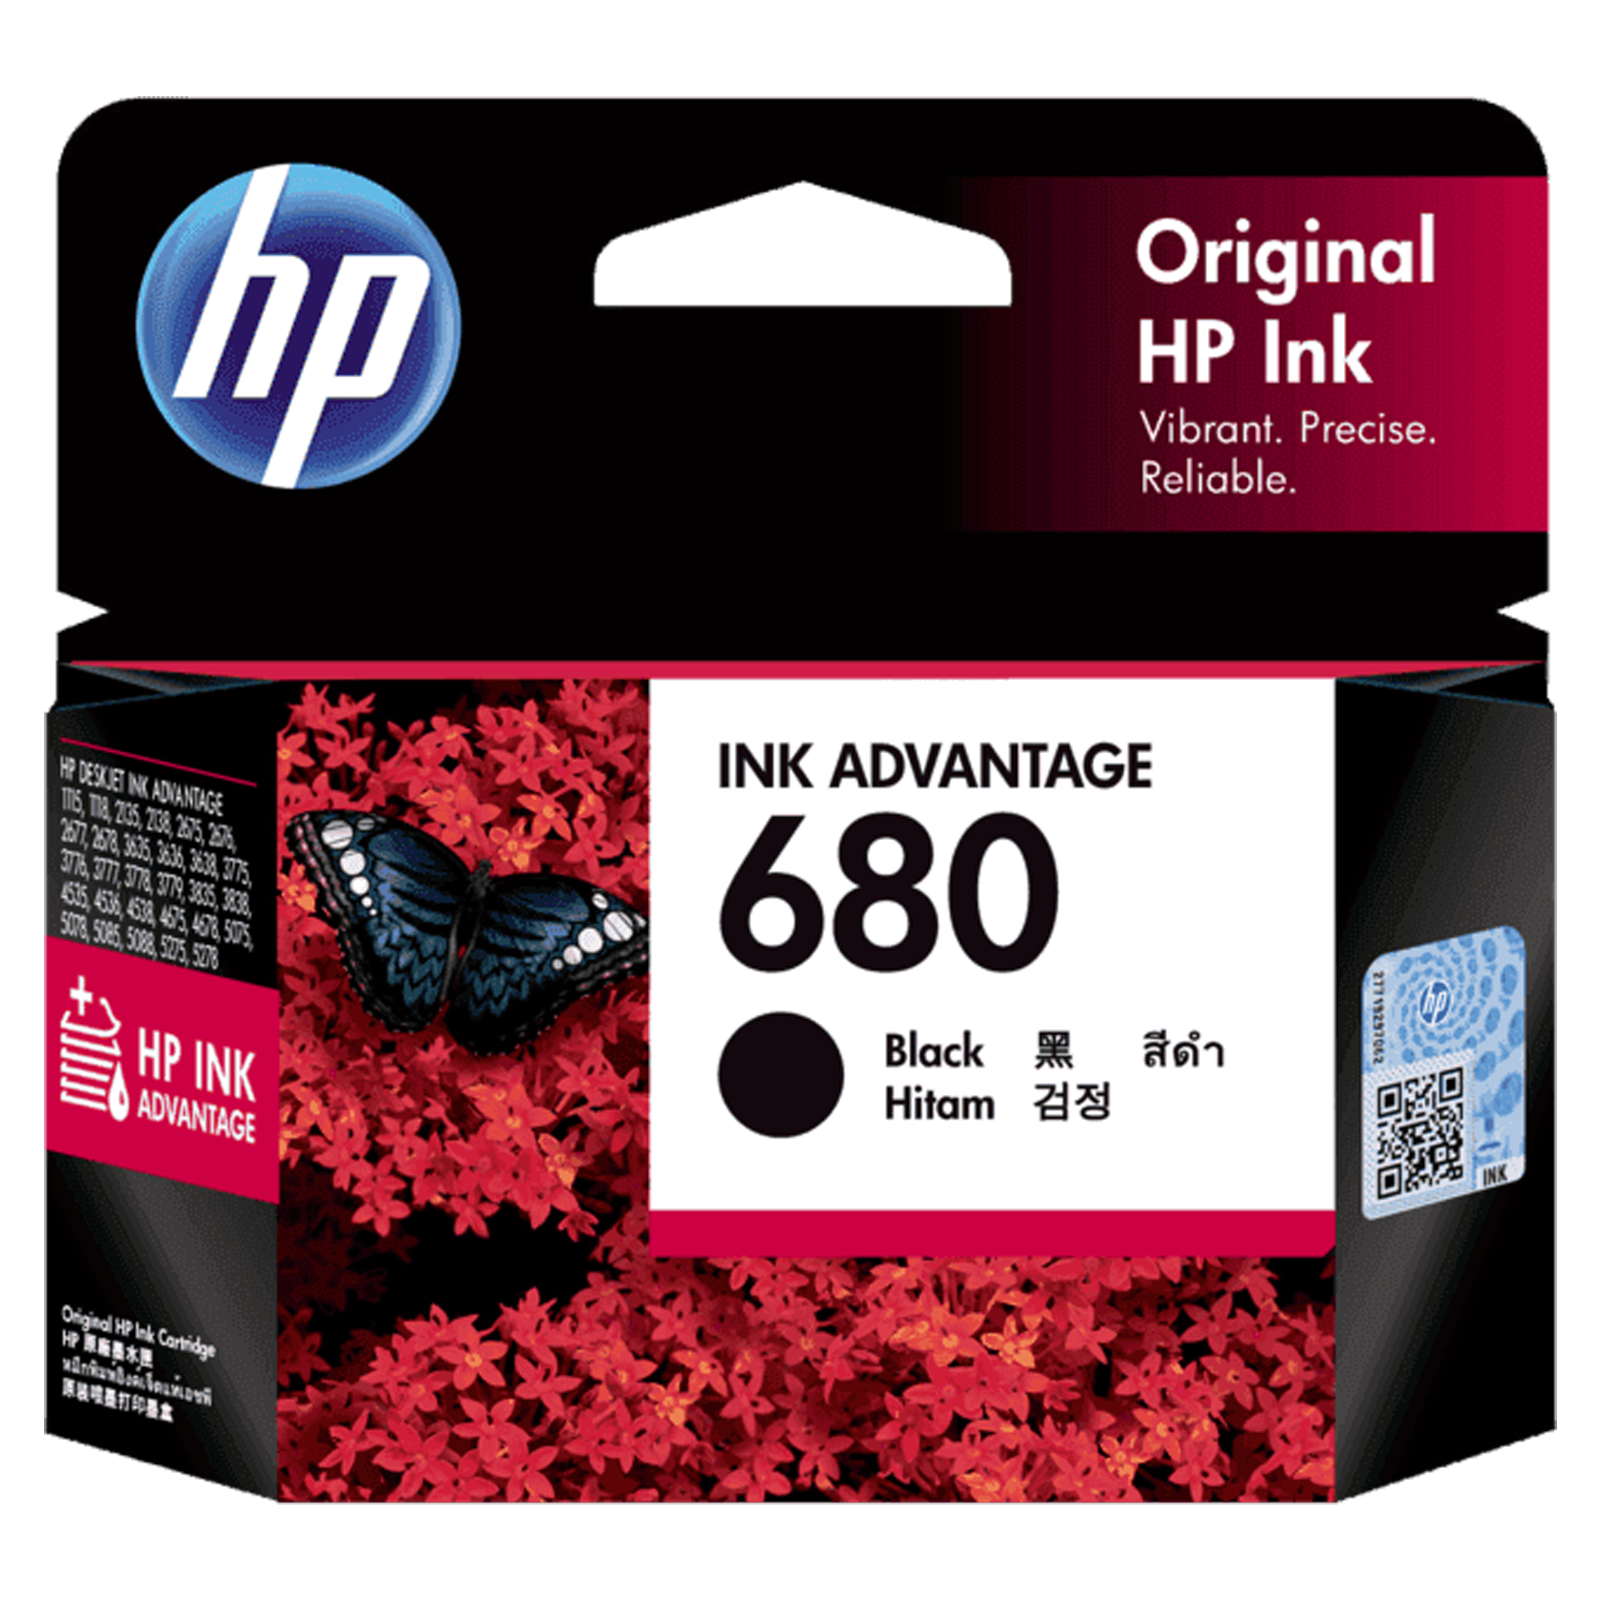 HP 680 Original Advantage Ink Cartridge (889296532194N, Black)_1